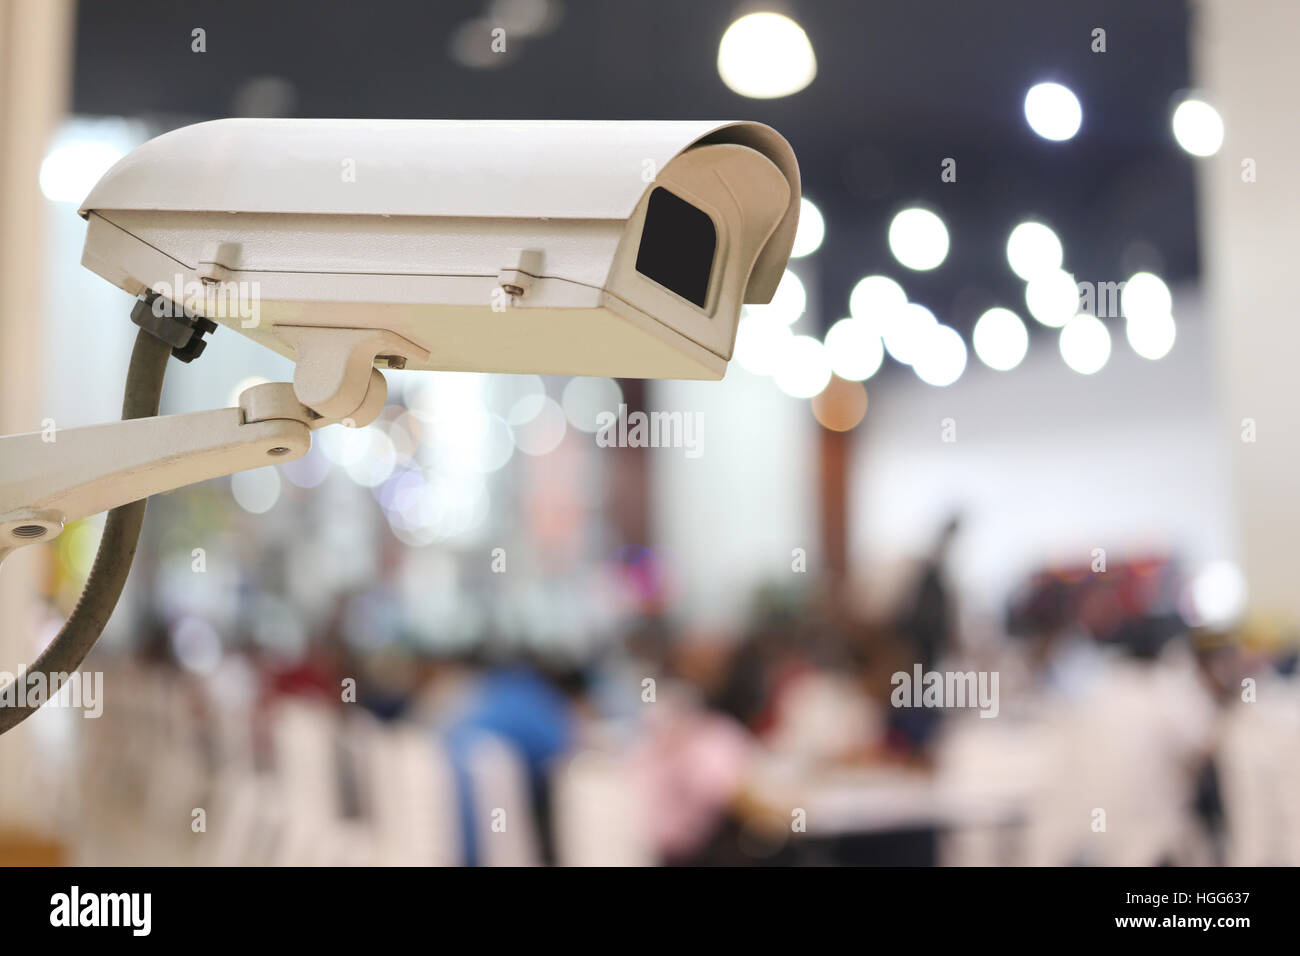 live mall security cameras